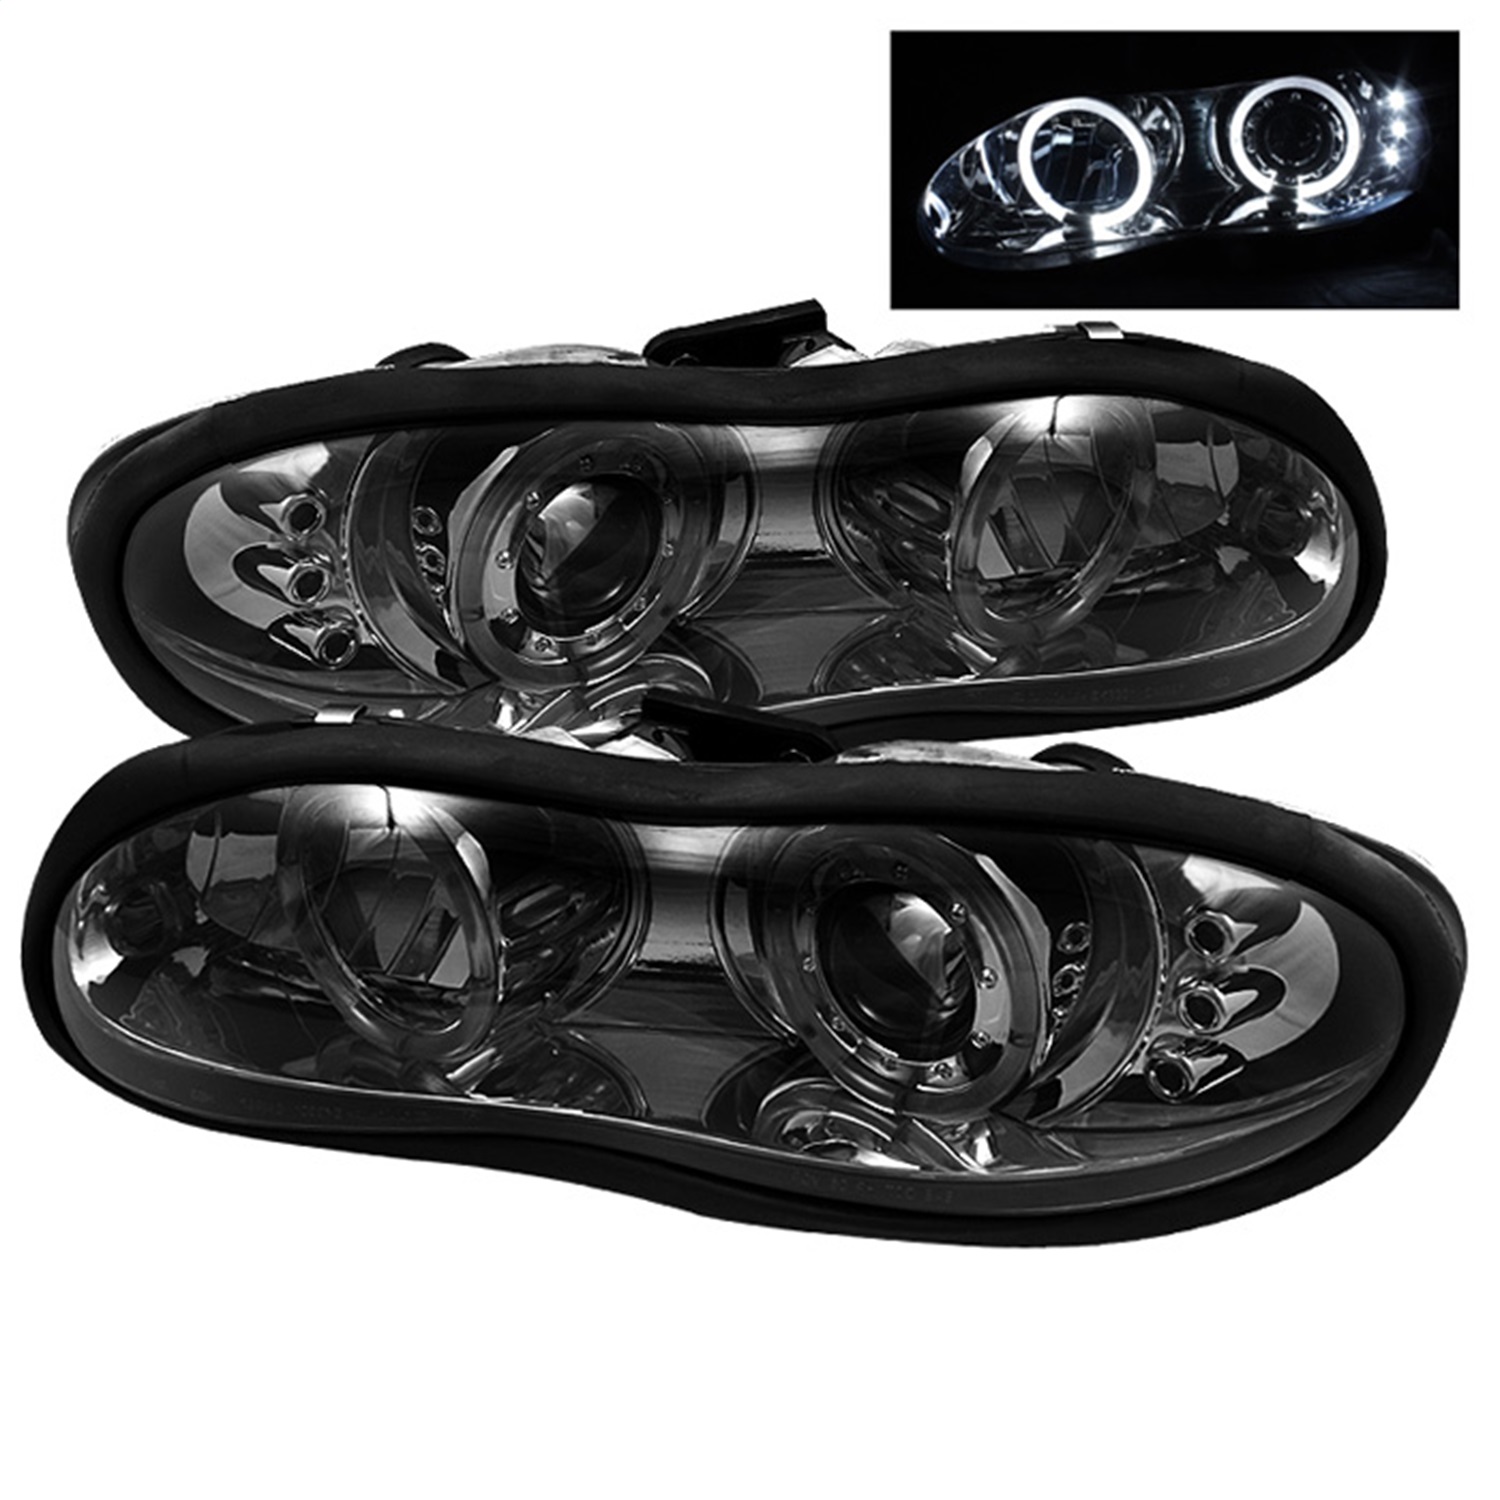 Spyder Auto 5009258 Halo LED Projector Headlights Fits 98-02 Camaro